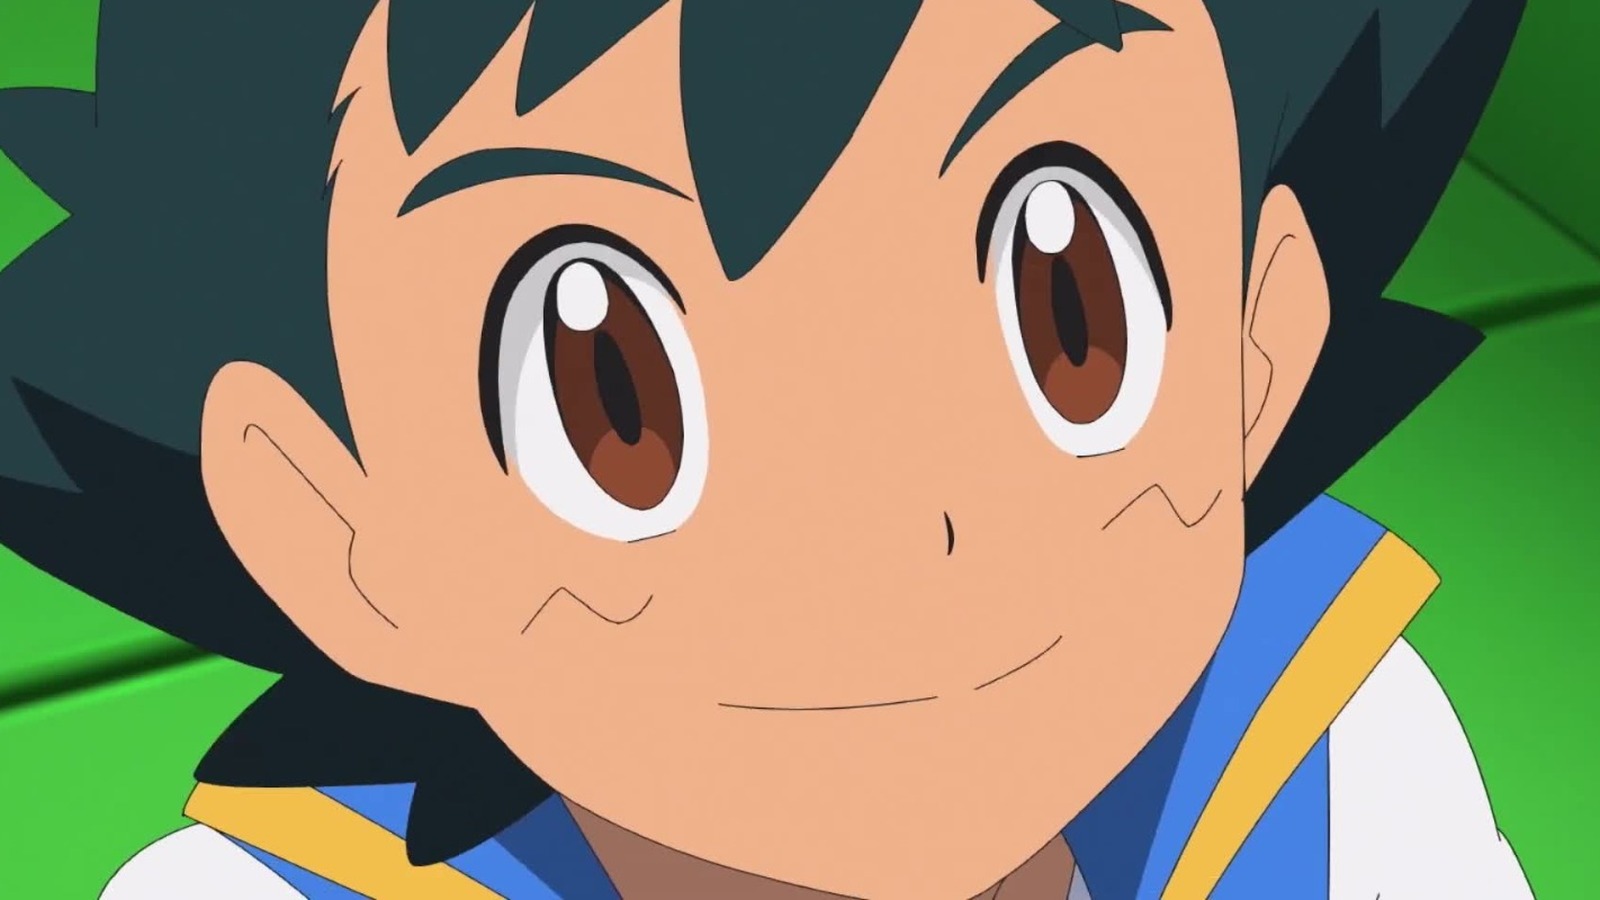 Pokémon Anime Previews Final Ash Episodes, New Series in English